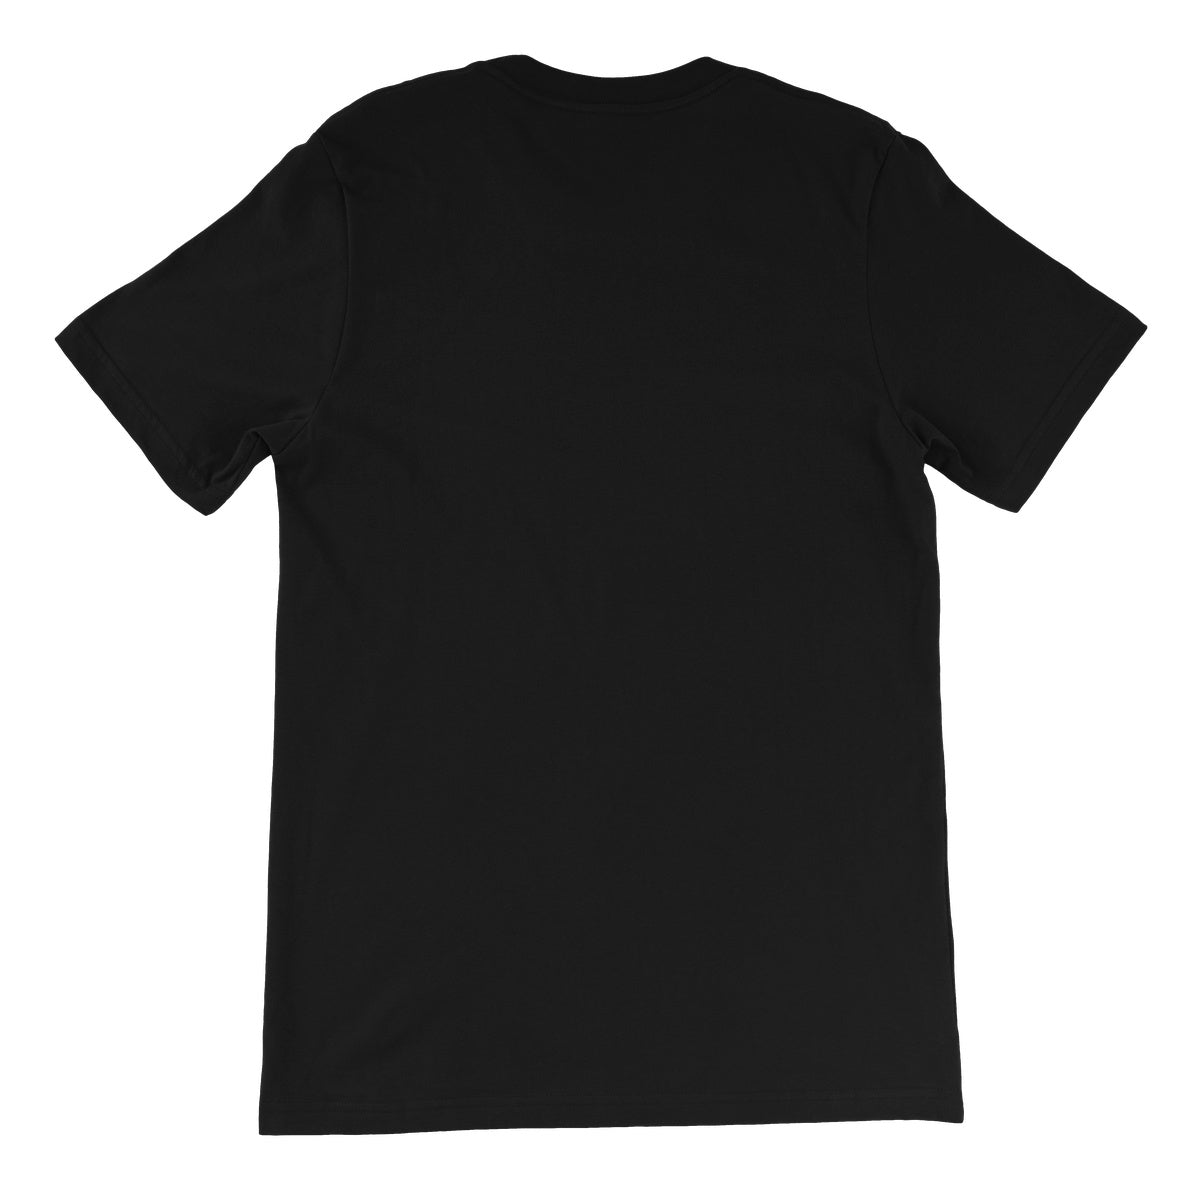 Bound For Glory 2020 - Crazzy Steve Unisex Short Sleeve T-Shirt